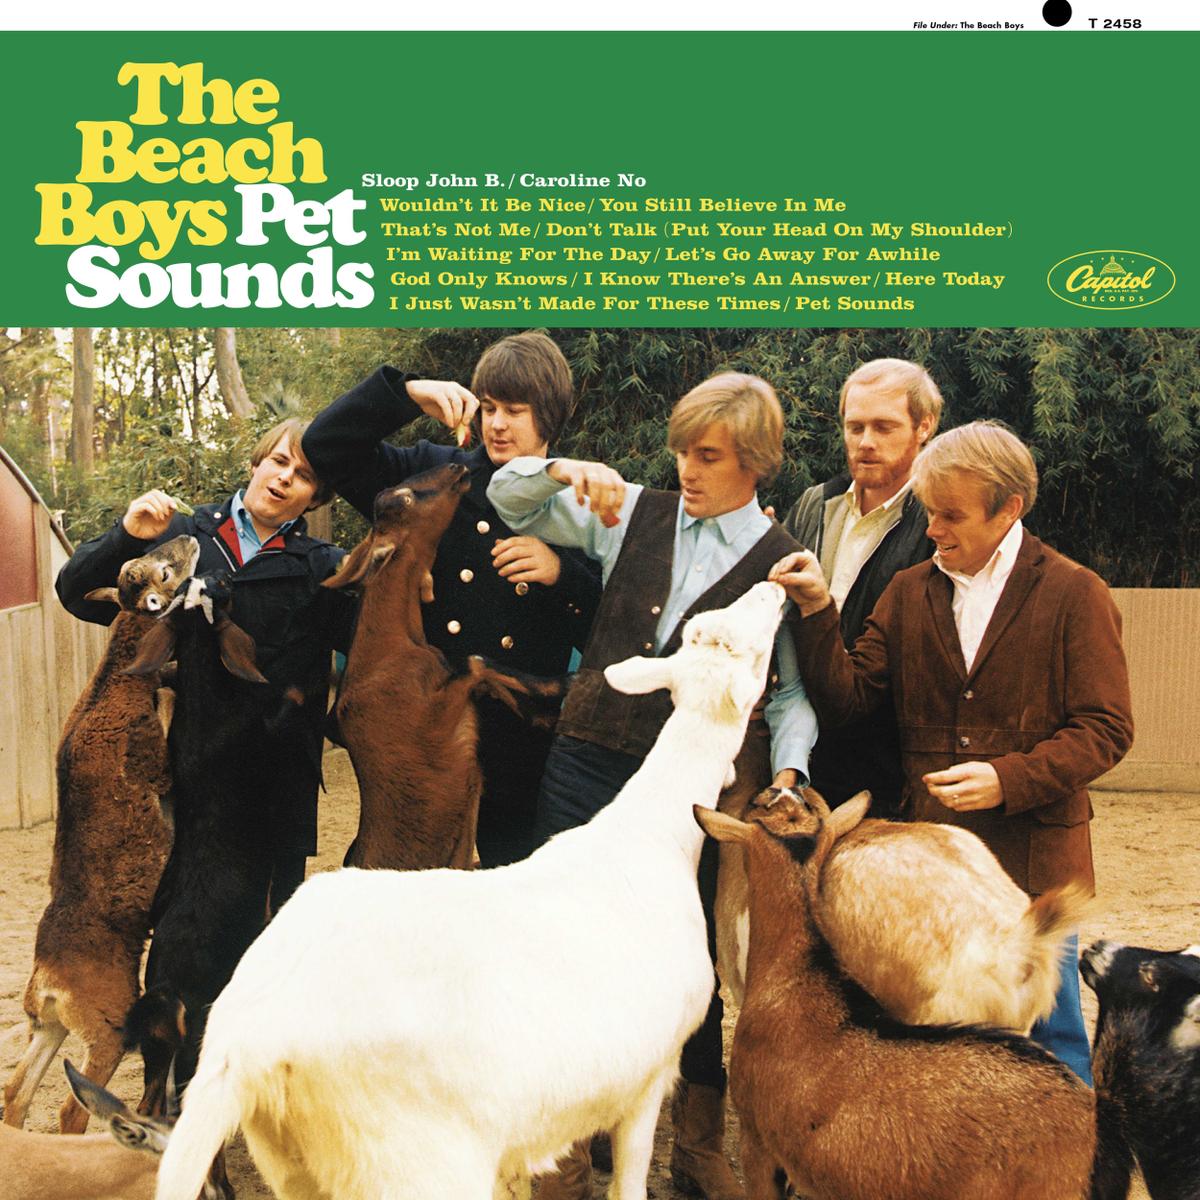 Pet Sounds (Stereo u0026 Mono) - CD - The Beach Boys Official Store